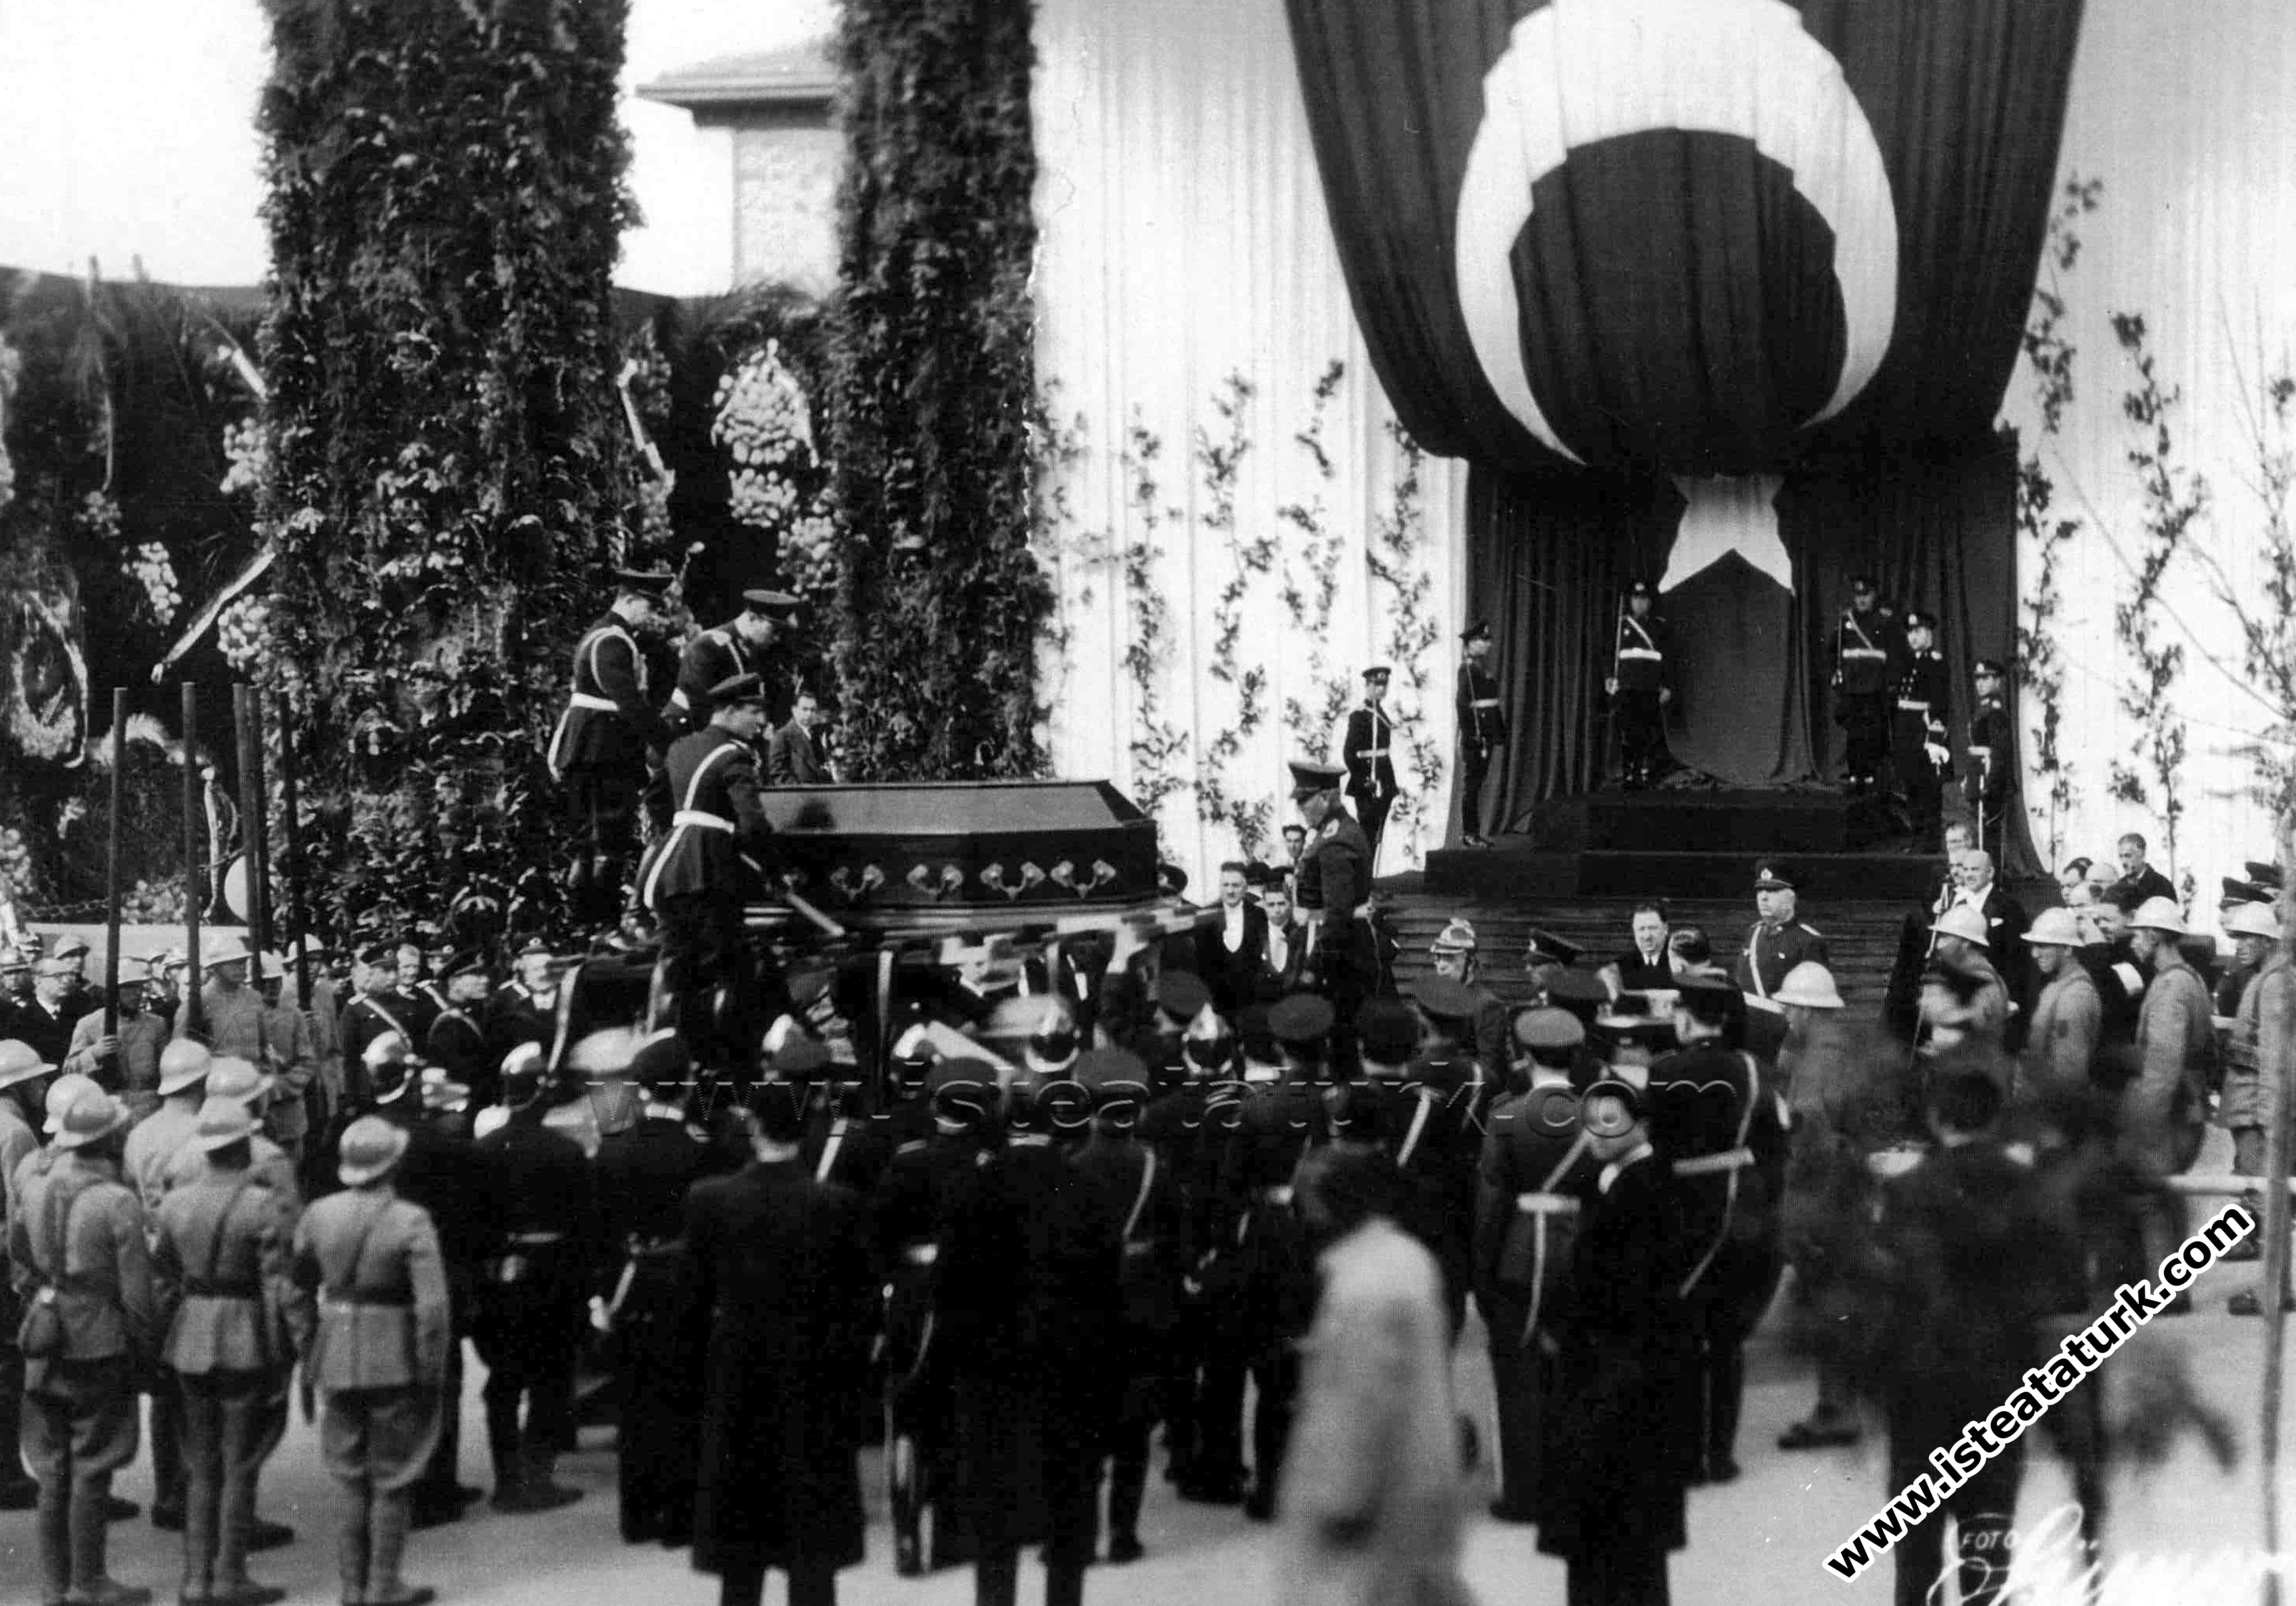 Atatürk's Funeral Ceremony (1938 - 1953)